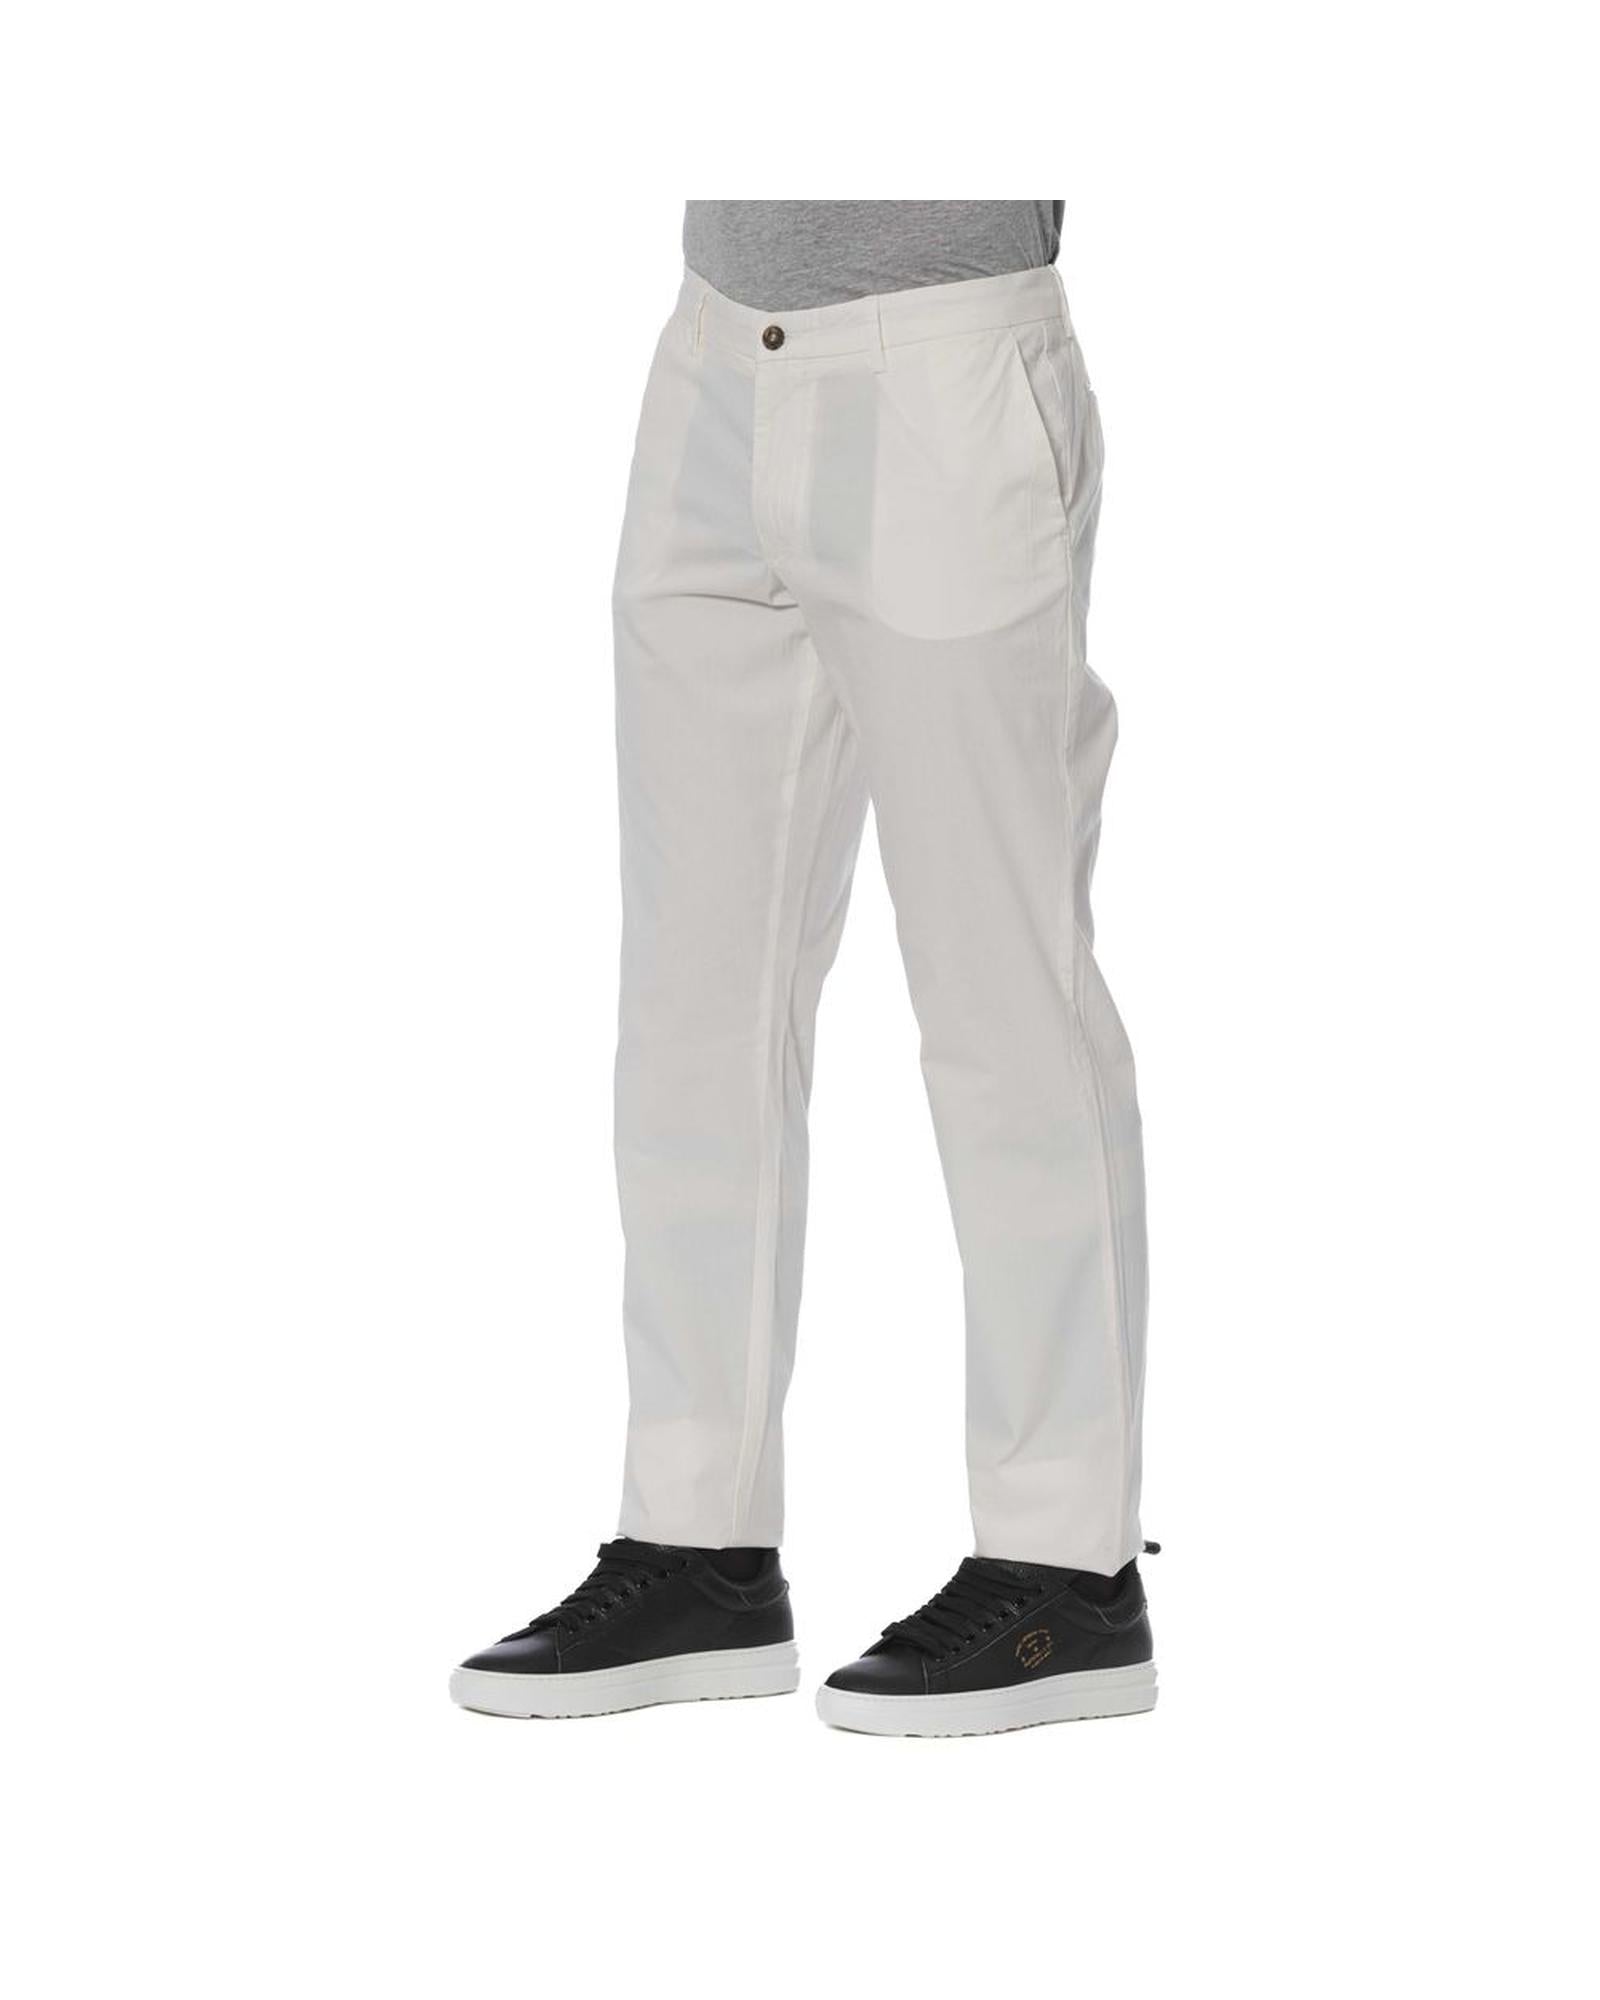 Men's White Cotton Jeans & Pant - W44 US